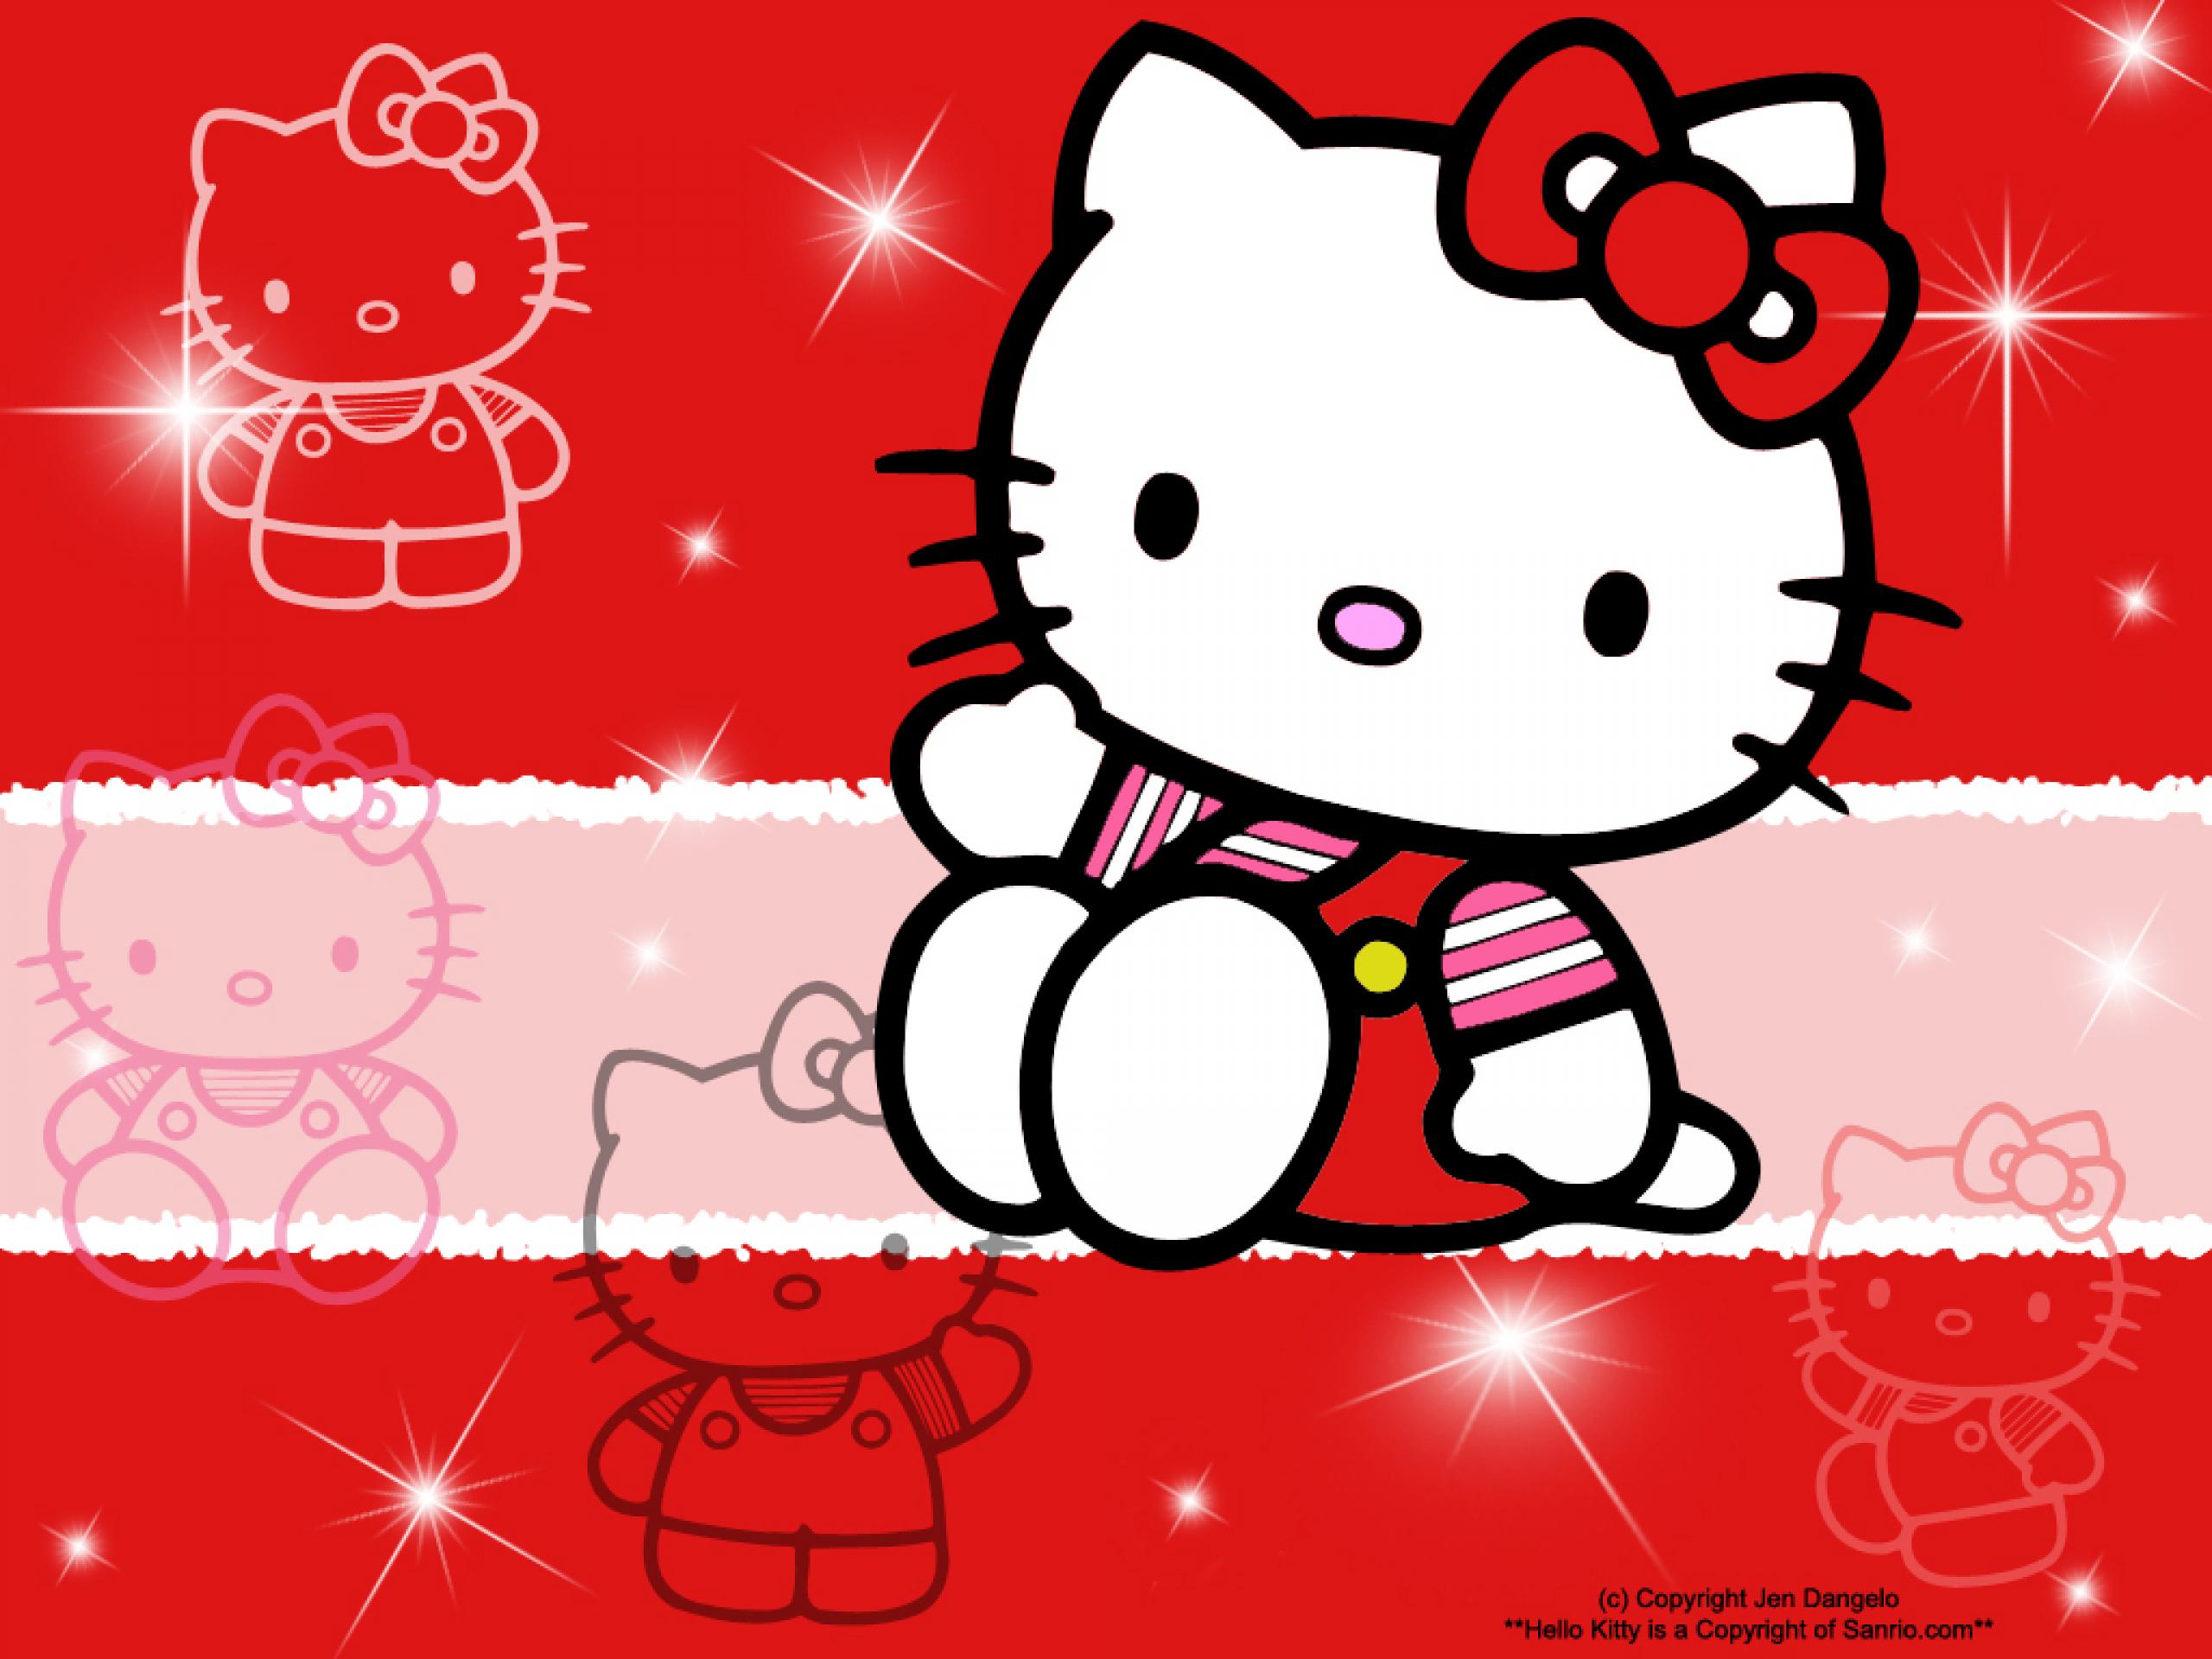 Download Hello Kitty Cheetah Wallpaper For Iphone #frl ngepLuk.com